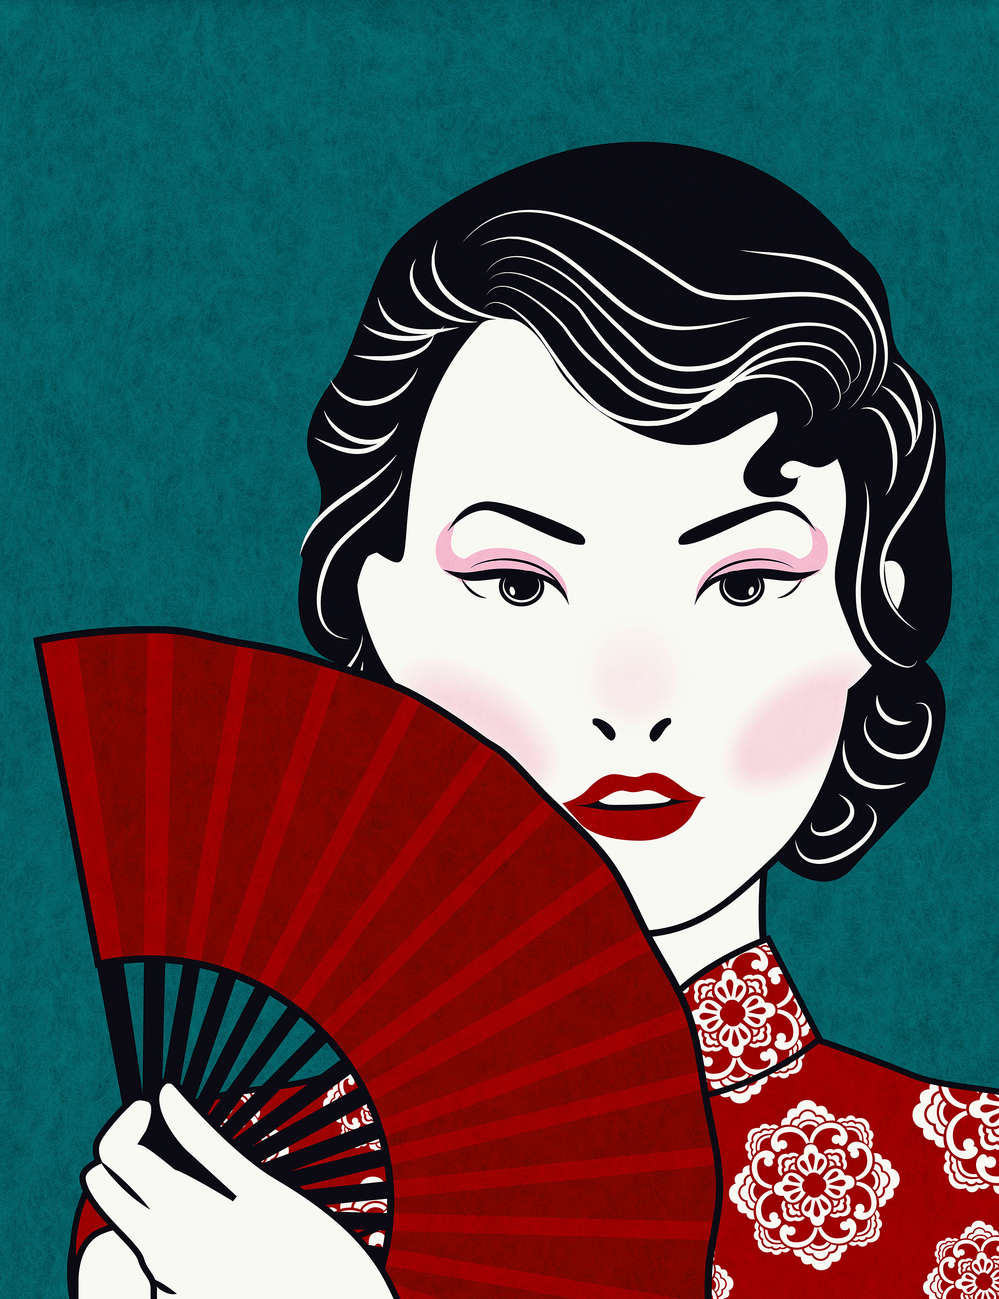             Photo wallpaper Woman with Fan, Asian Motif - Premium Smooth Non-woven
        